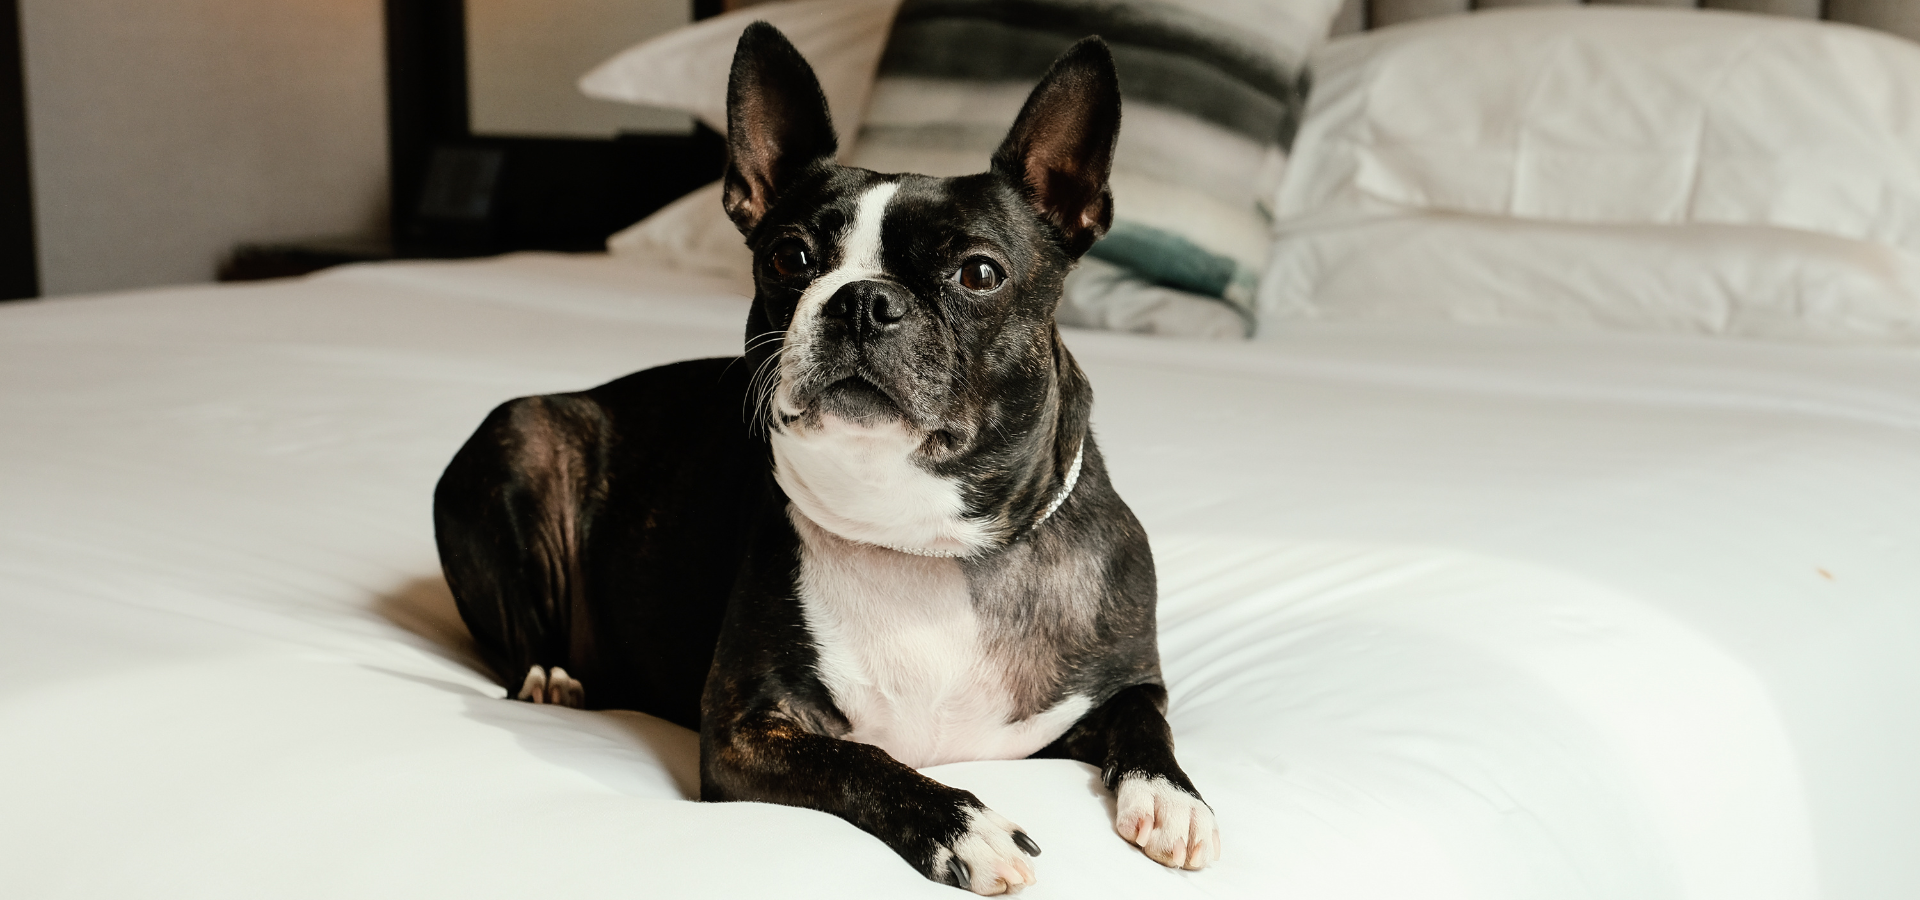 6 Dog-Friendly Hotels in New York City